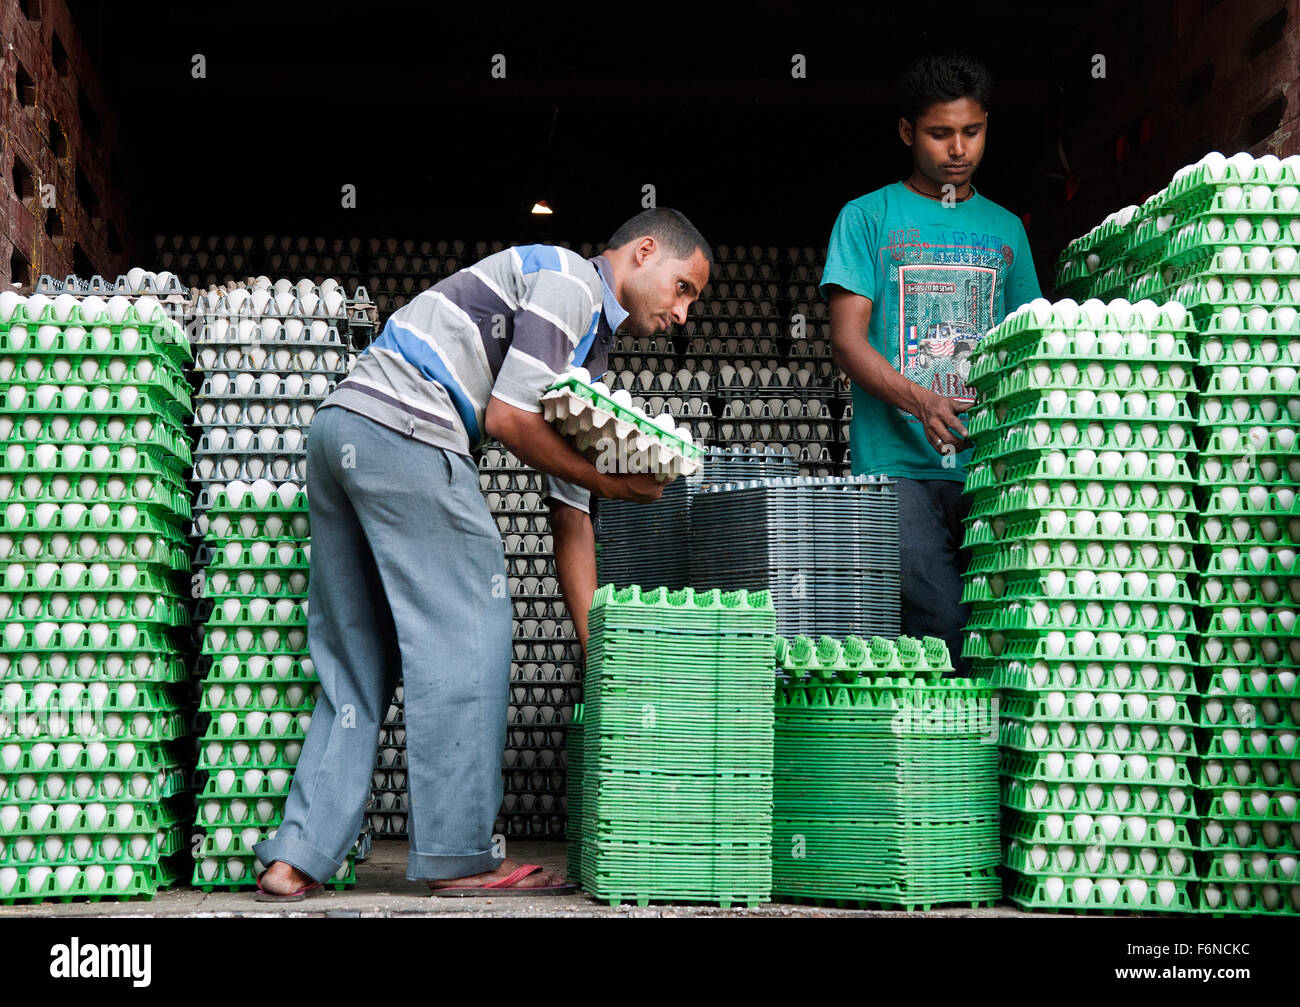 The image of Eggs unloading was taken in Crawford market,  Mumbai, India Stock Photo